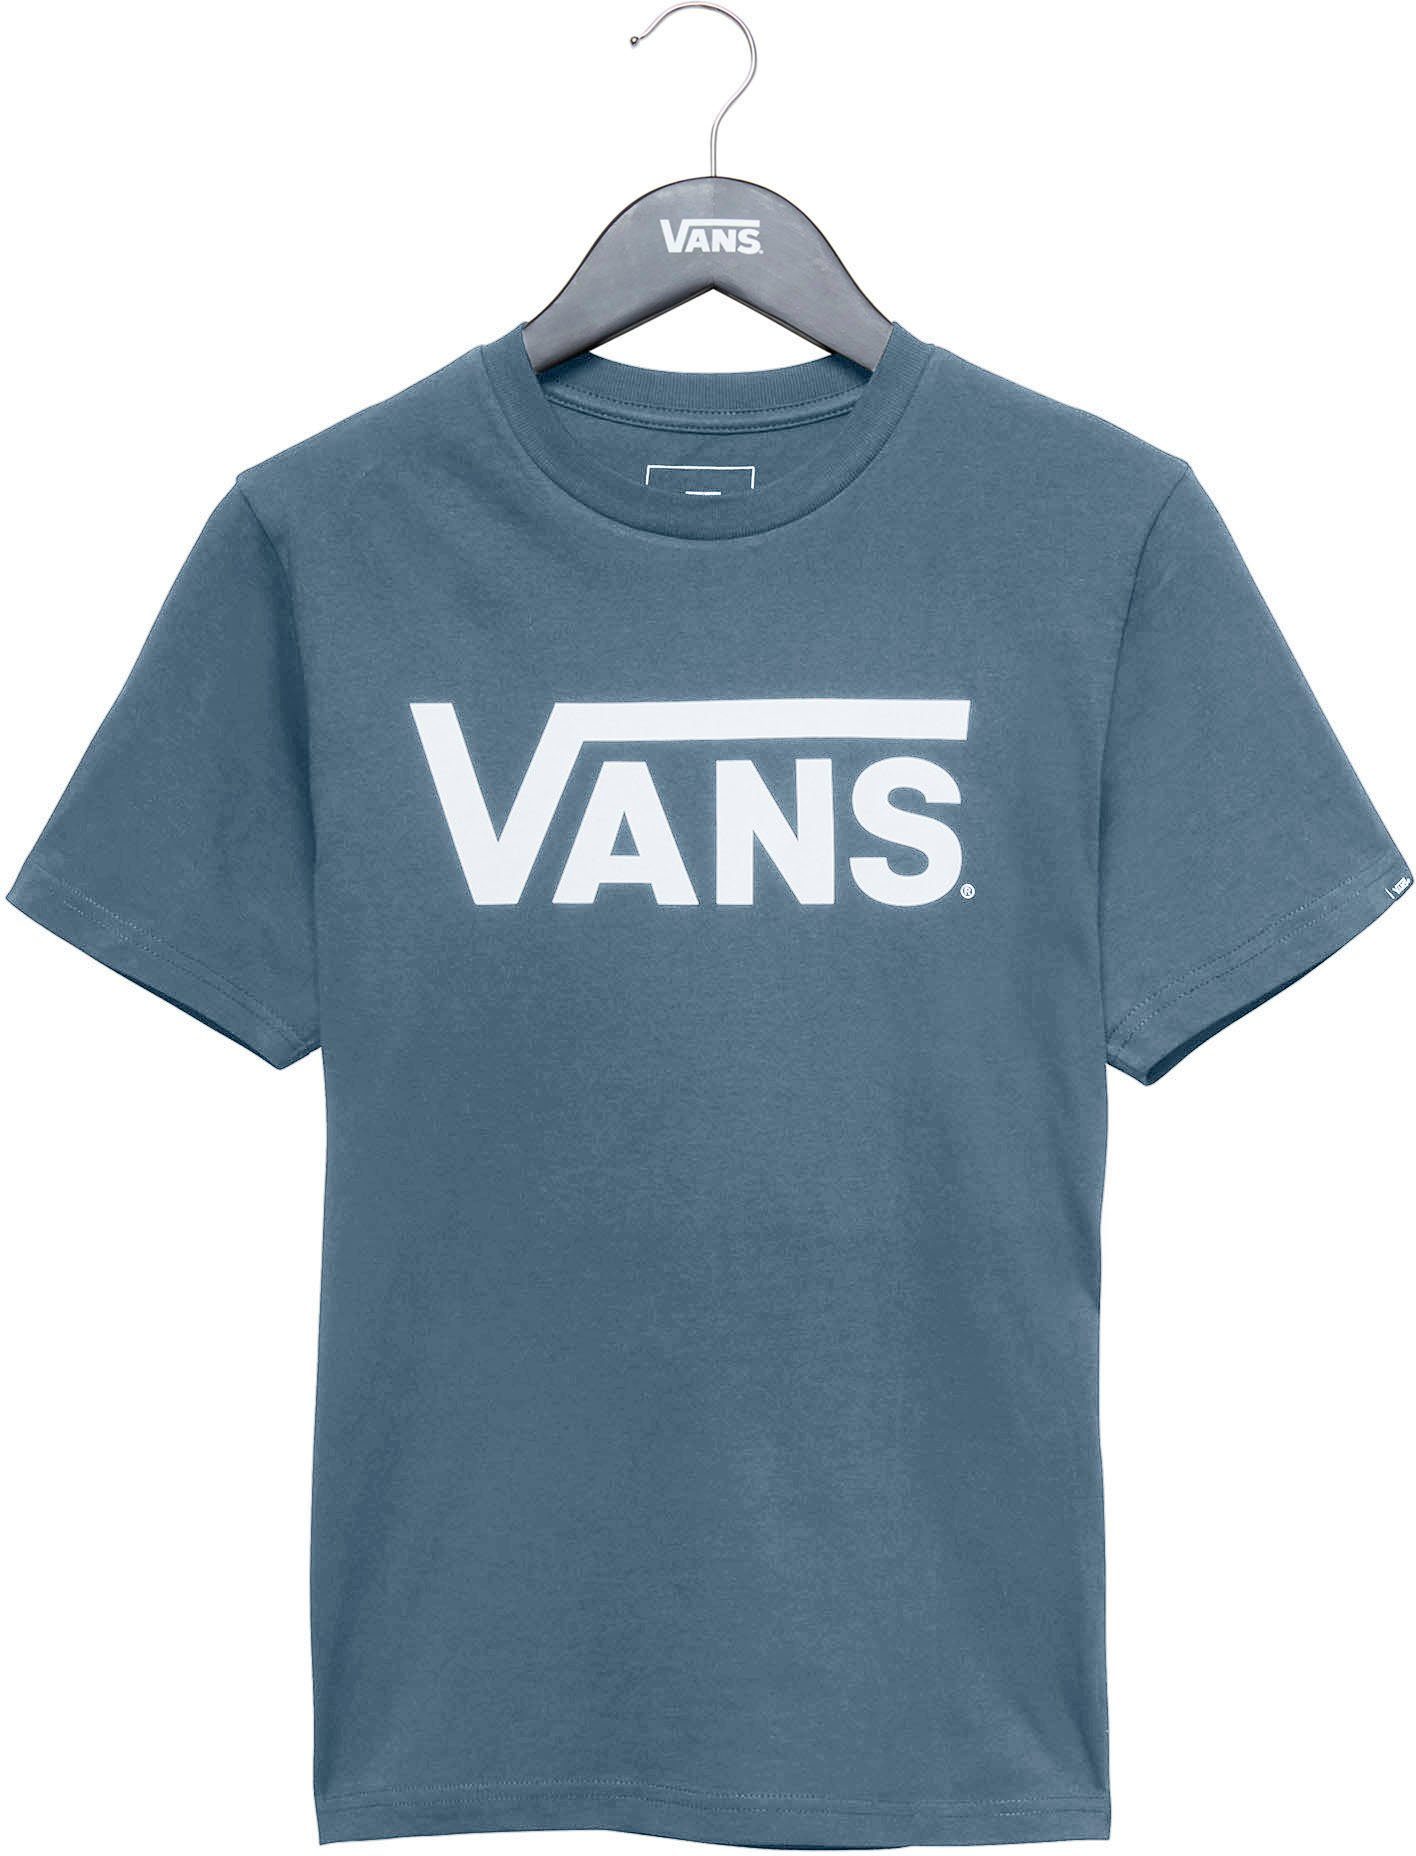 Vans VANS BOYS bluestone T-Shirt CLASSIC